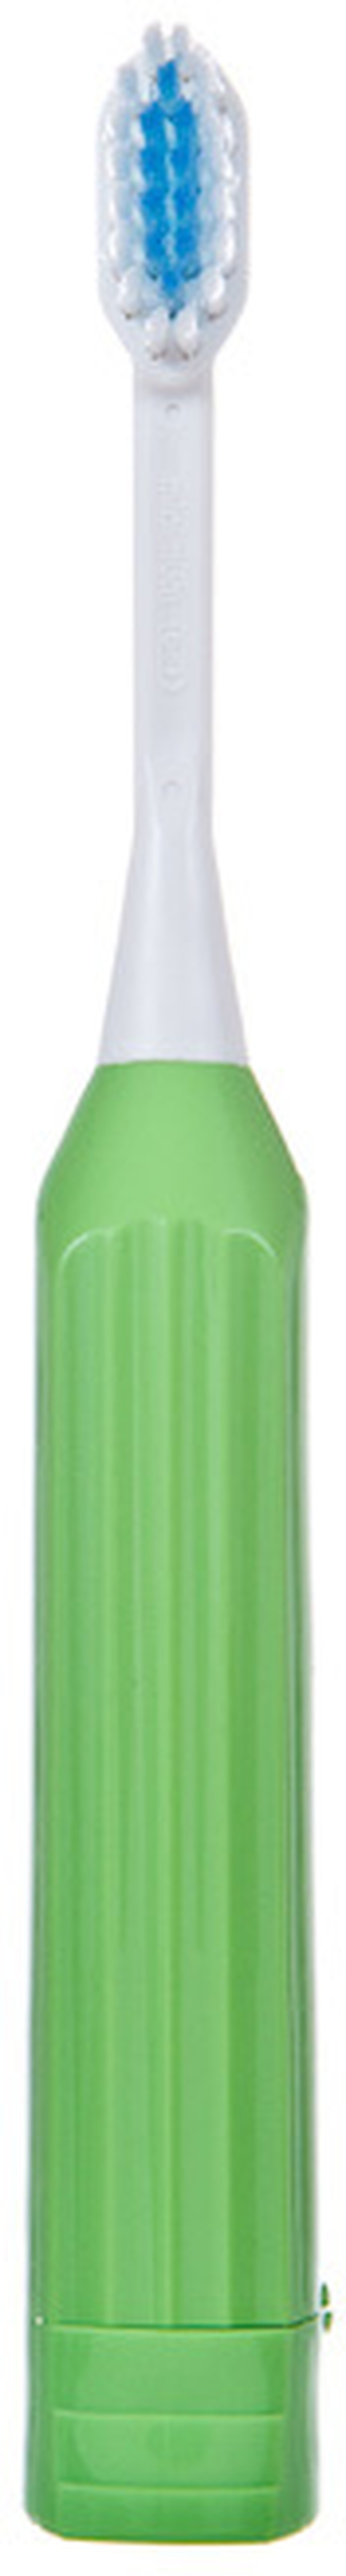 Электрическая зубная щетка Hapica Minus iON DB-3XG, зеленая фото